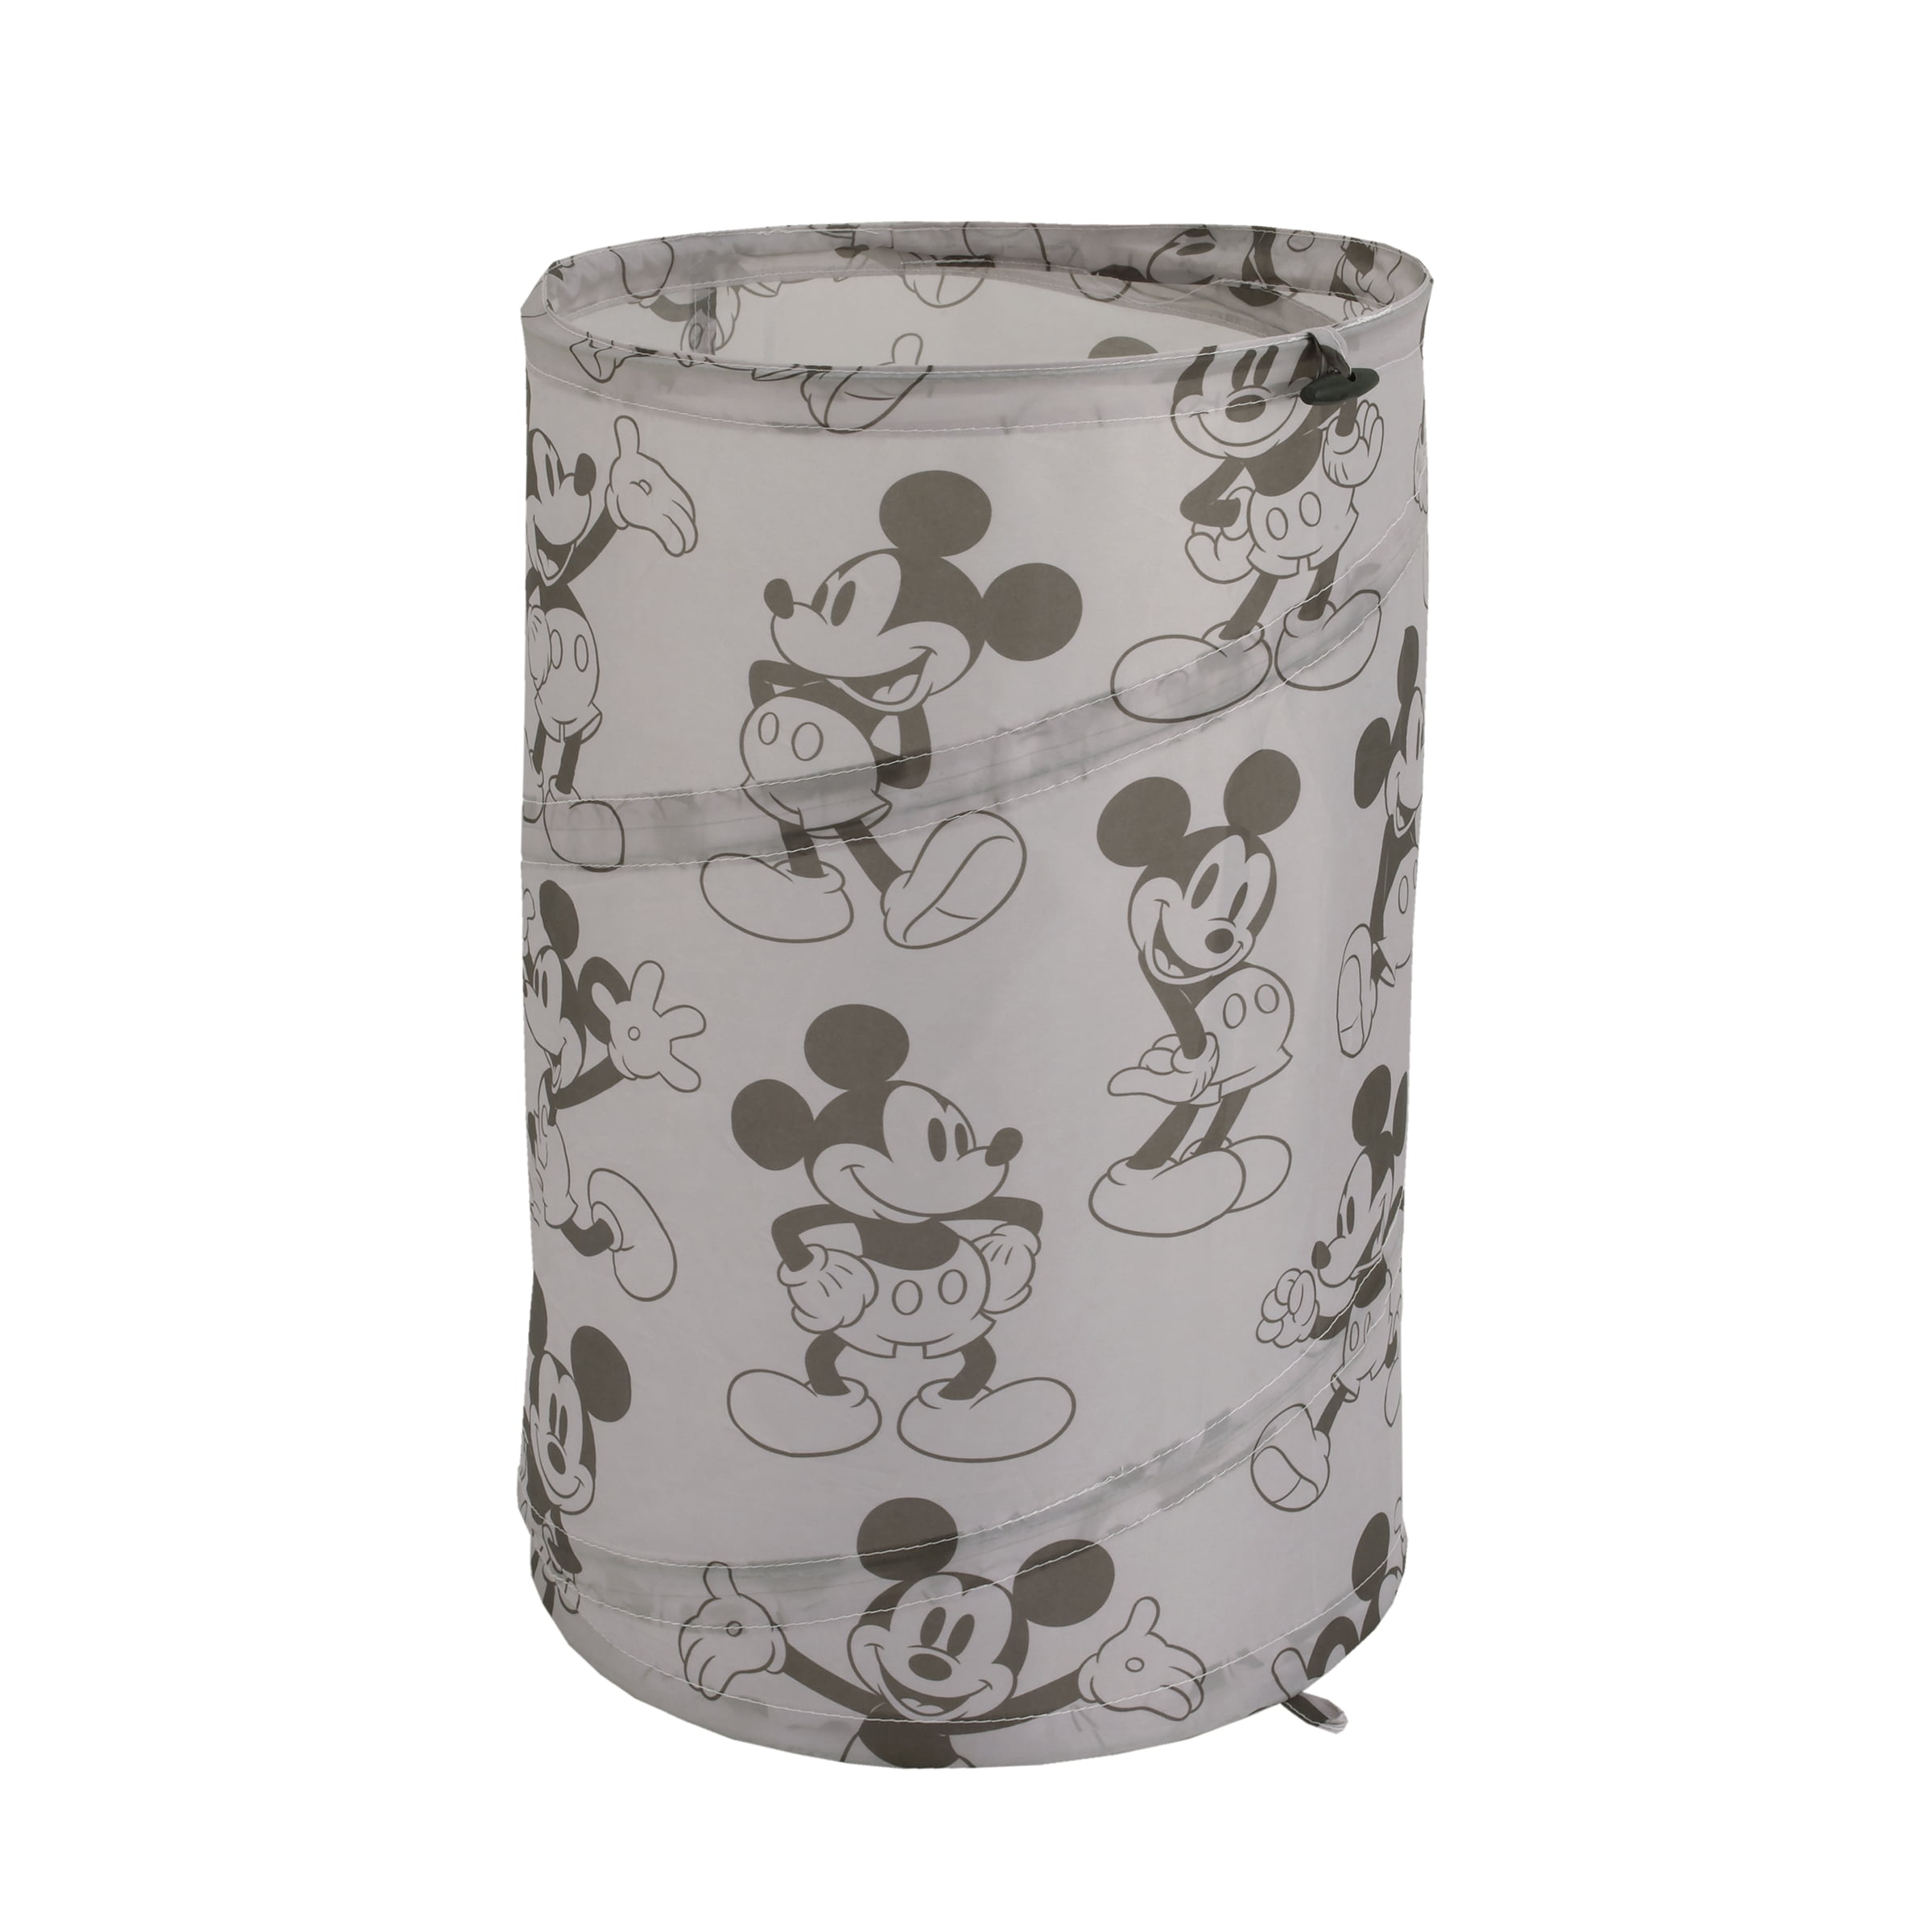 Details about   Minnie Mouse Pop Up Hamper Organizer Laundry Basket Bin Portable Toy Storage Way 